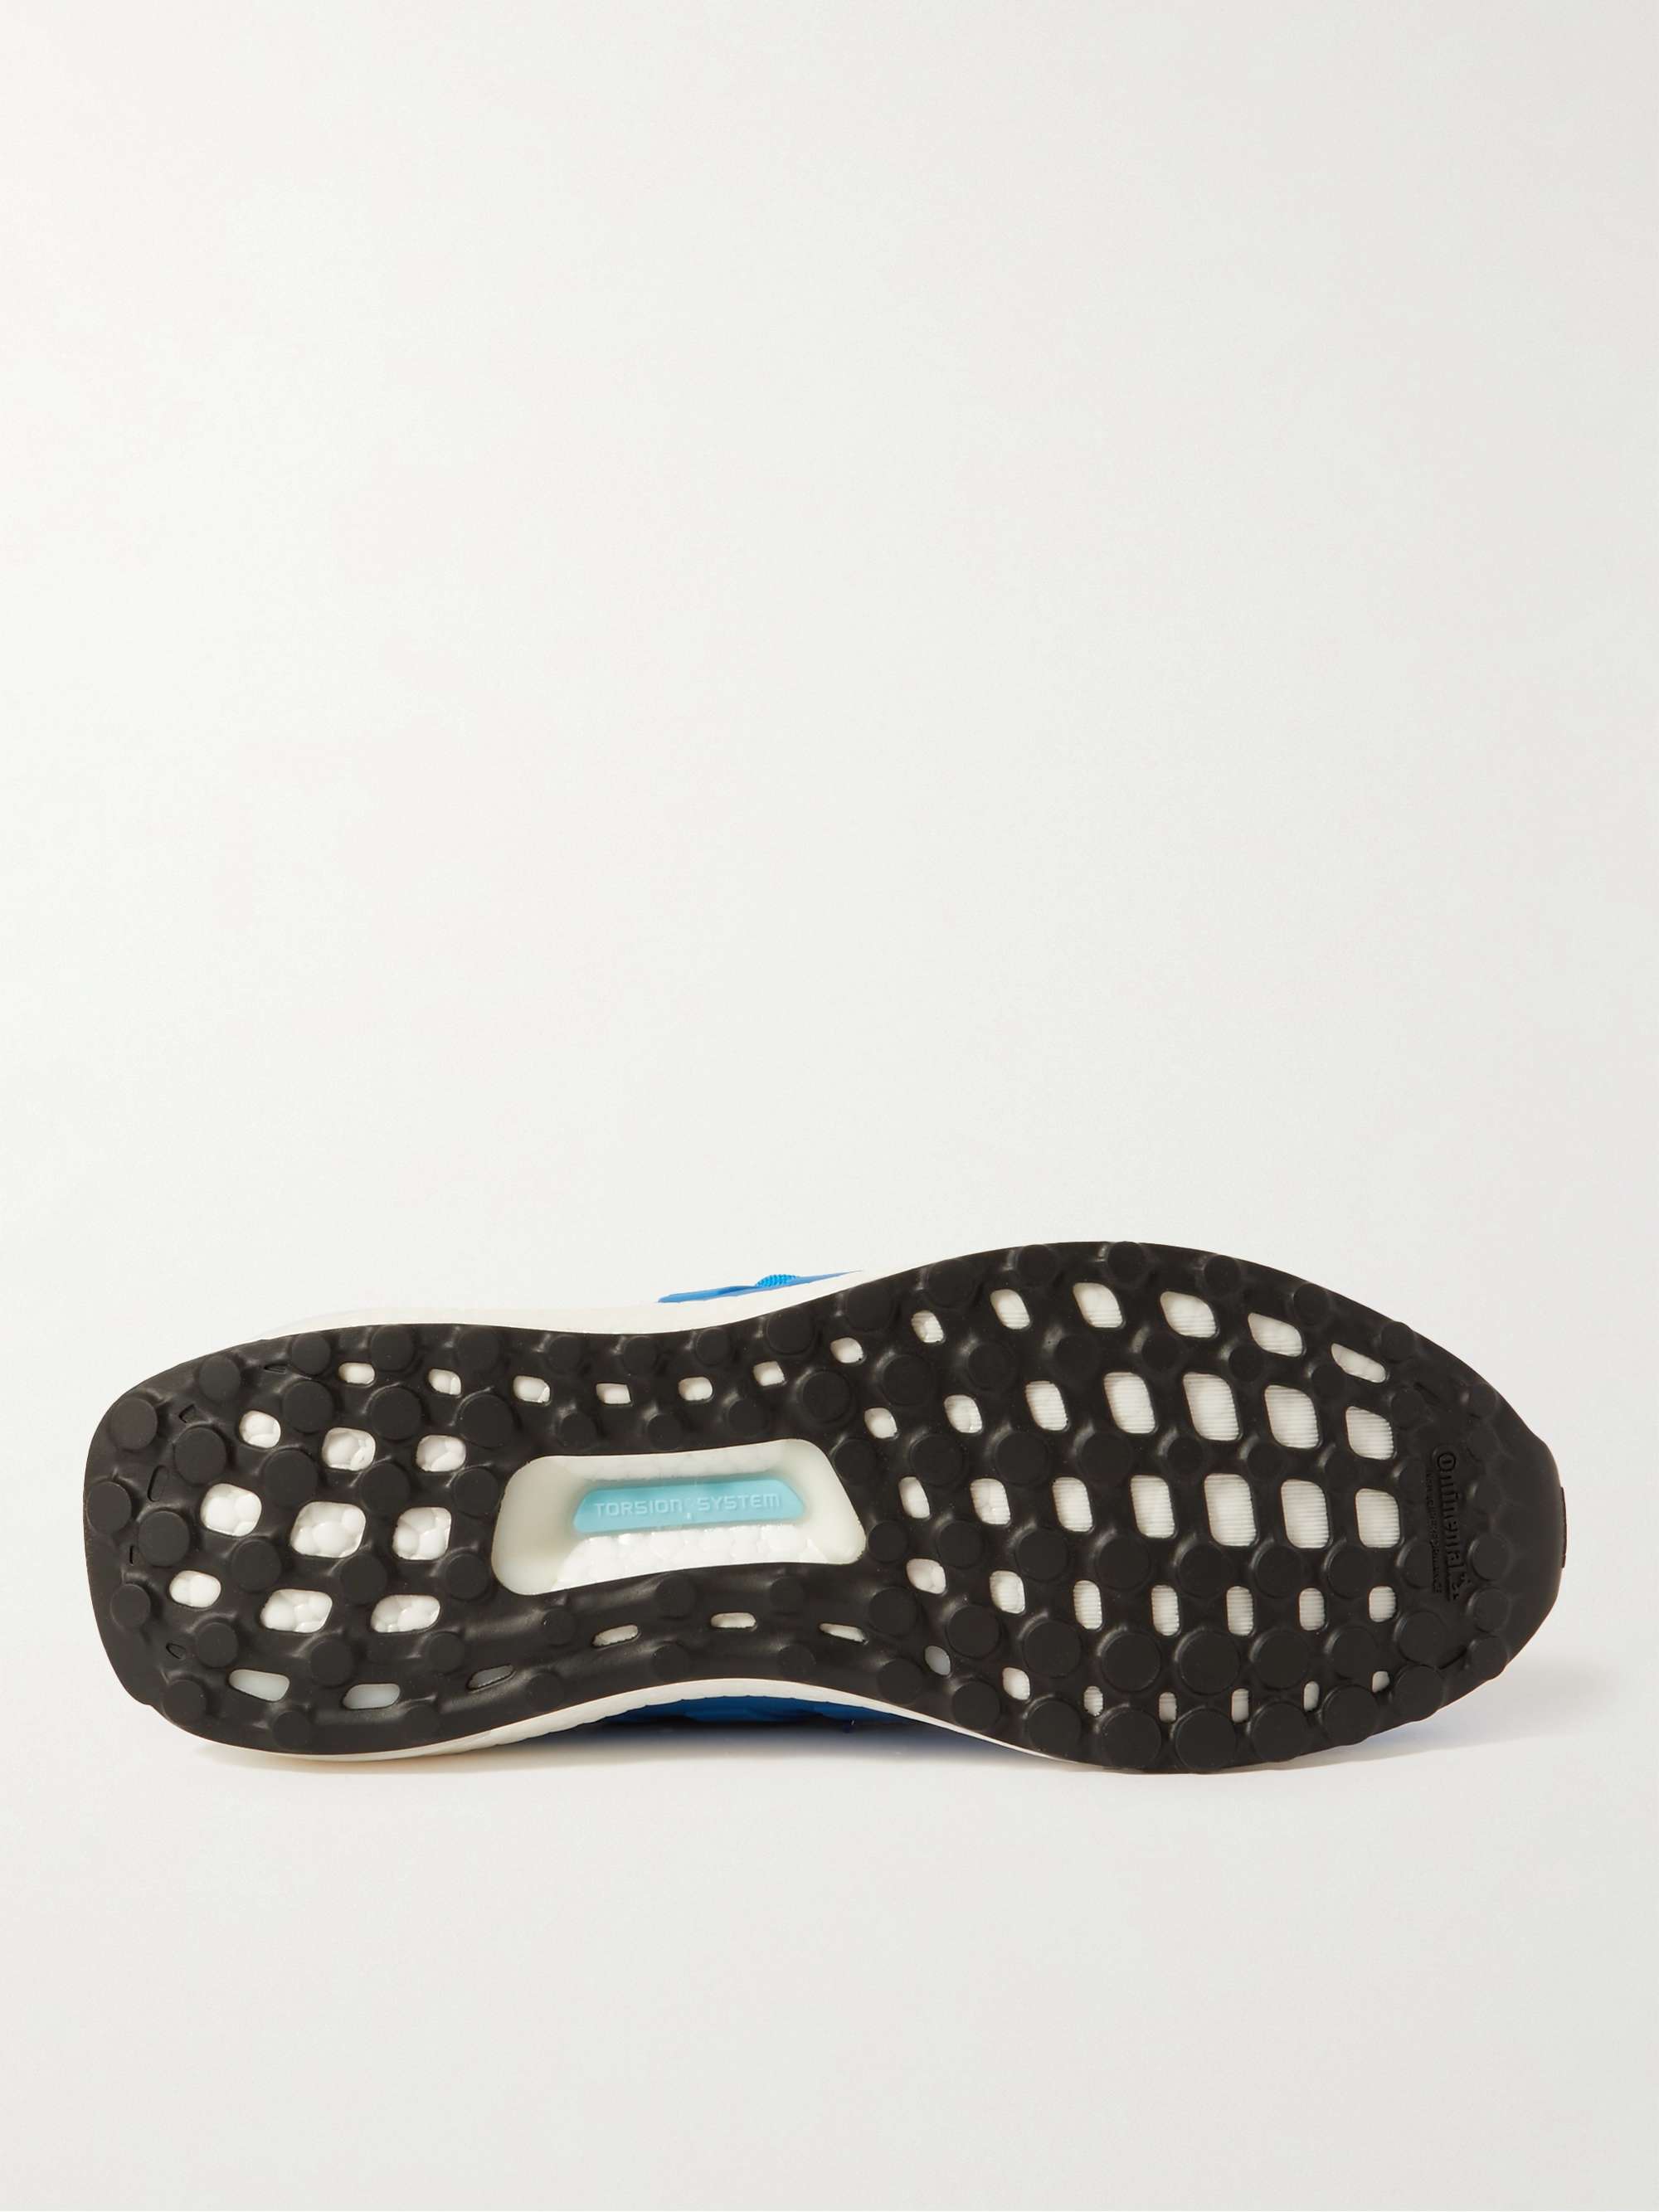 ADIDAS SPORT Ultraboost DNA Rubber-Trimmed Primeknit Sneakers